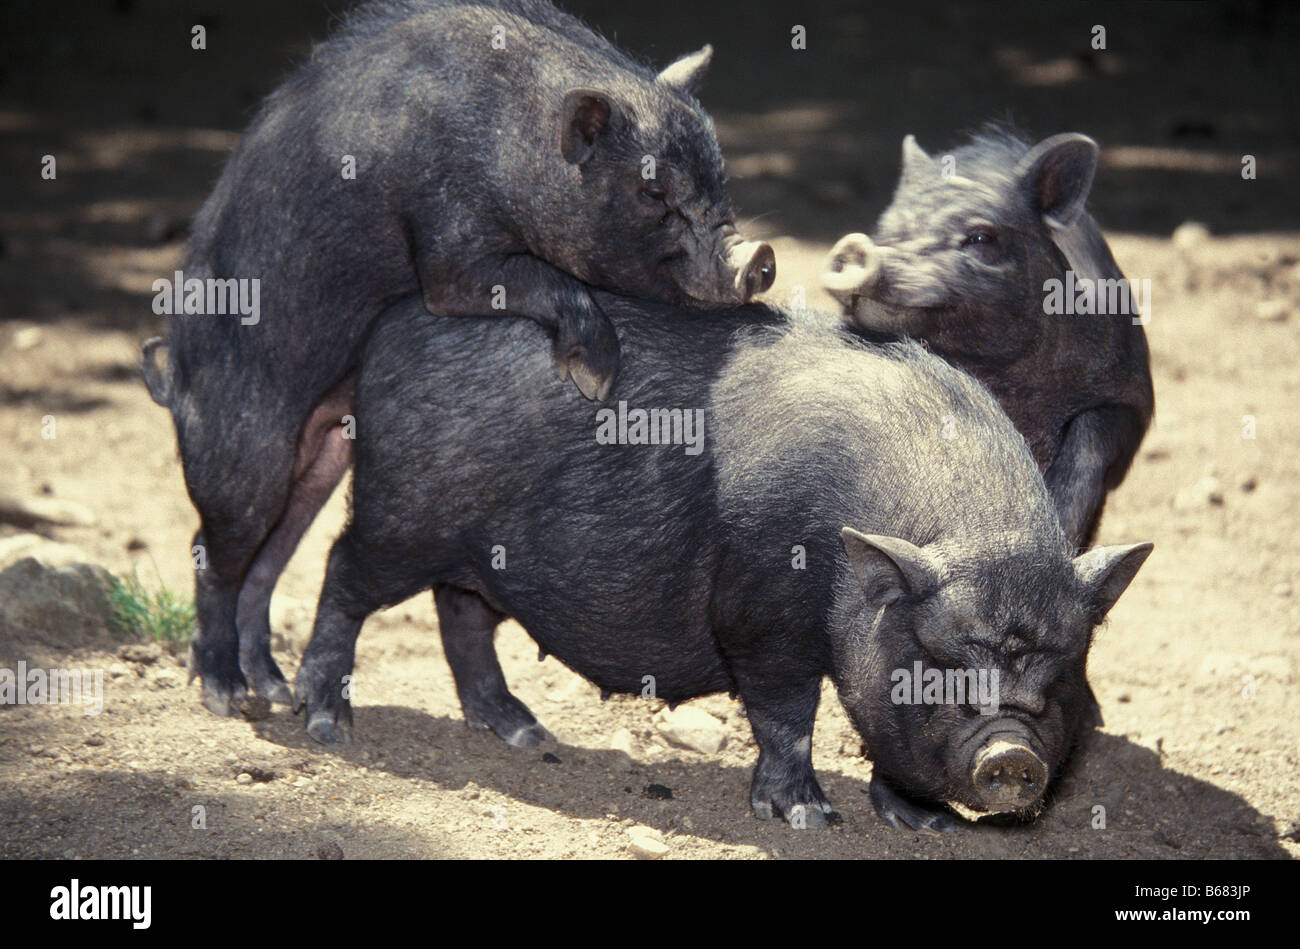 black-pig-of-vietnam-traditional-breeding-of-the-h-mong-adult-adults-B683JP.jpg